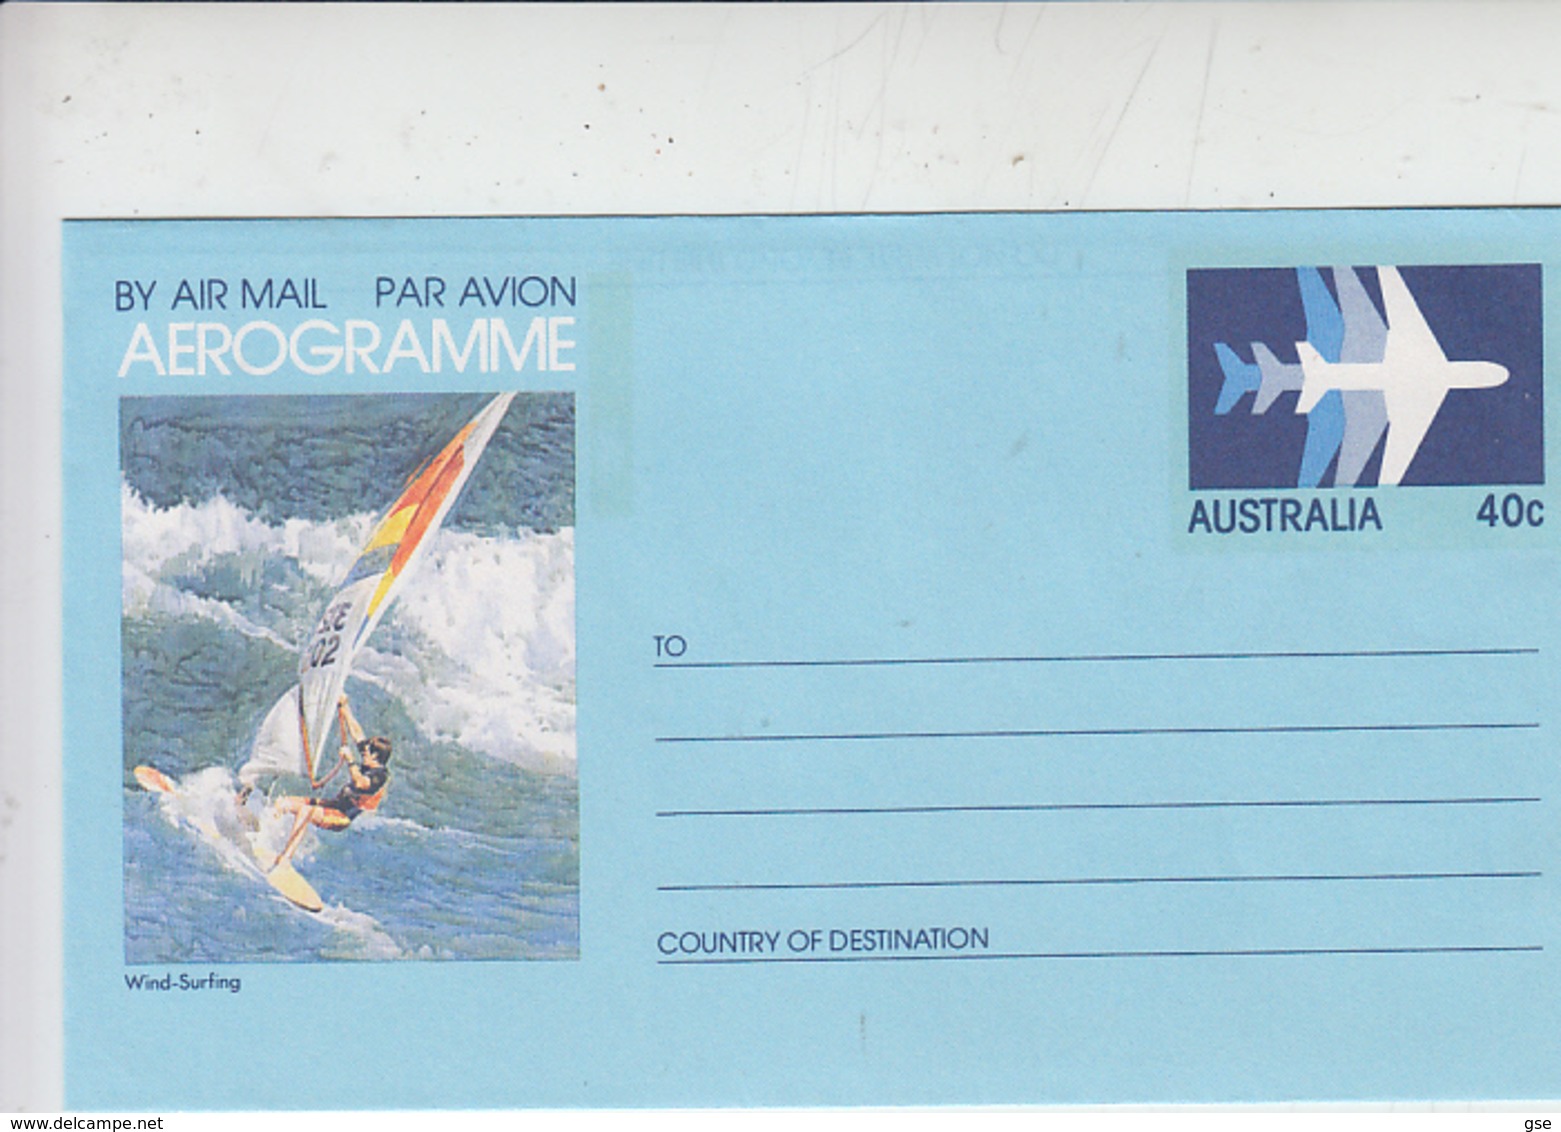 AUSTRALIA  - Aerogramme - Sport -" Wind-Surfing" - Mint Stamps